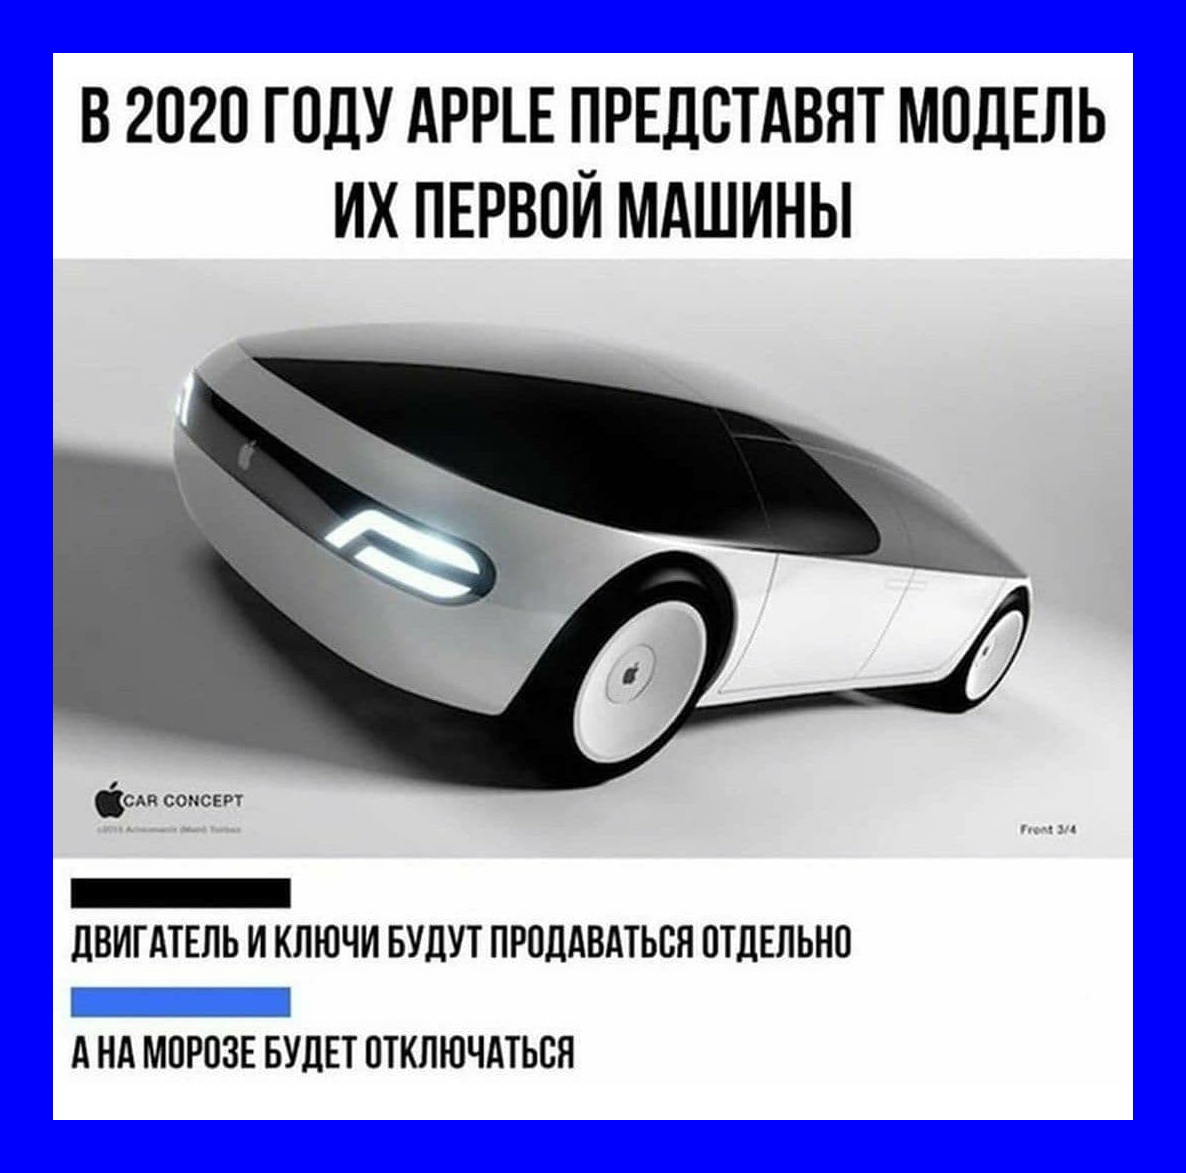 Apple car 2020